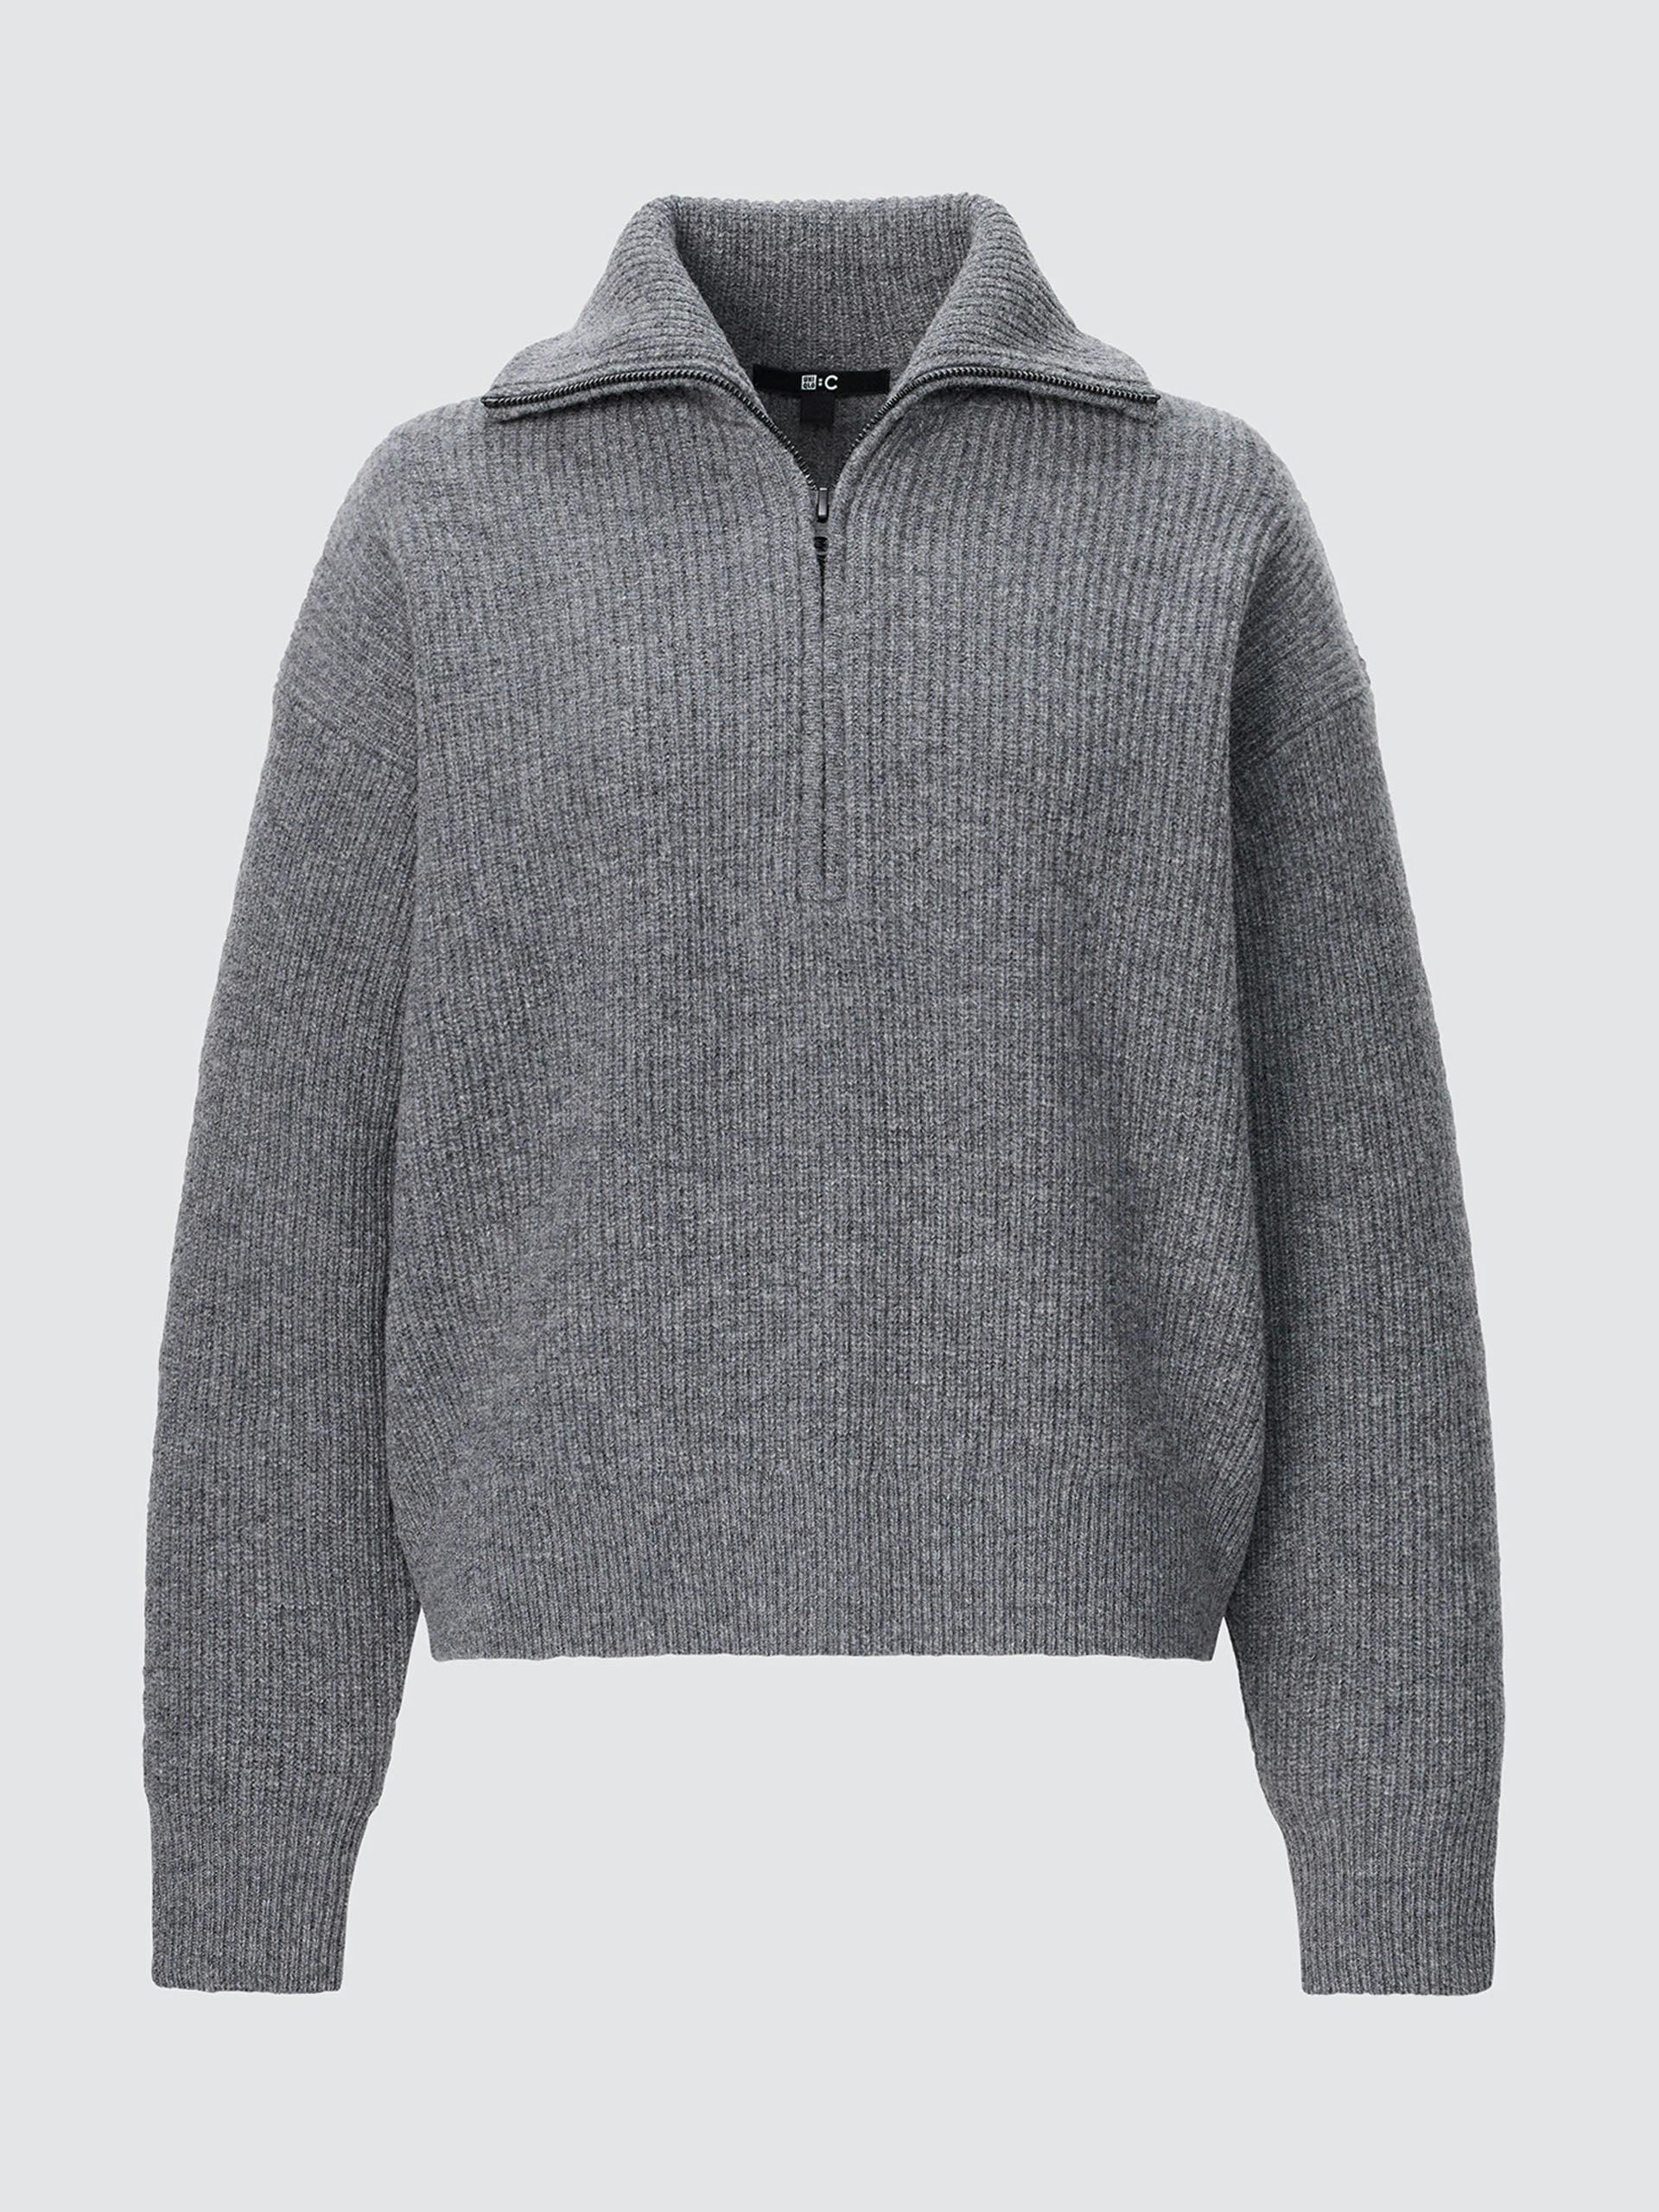 Premium lambswool half-zipped grey jumper